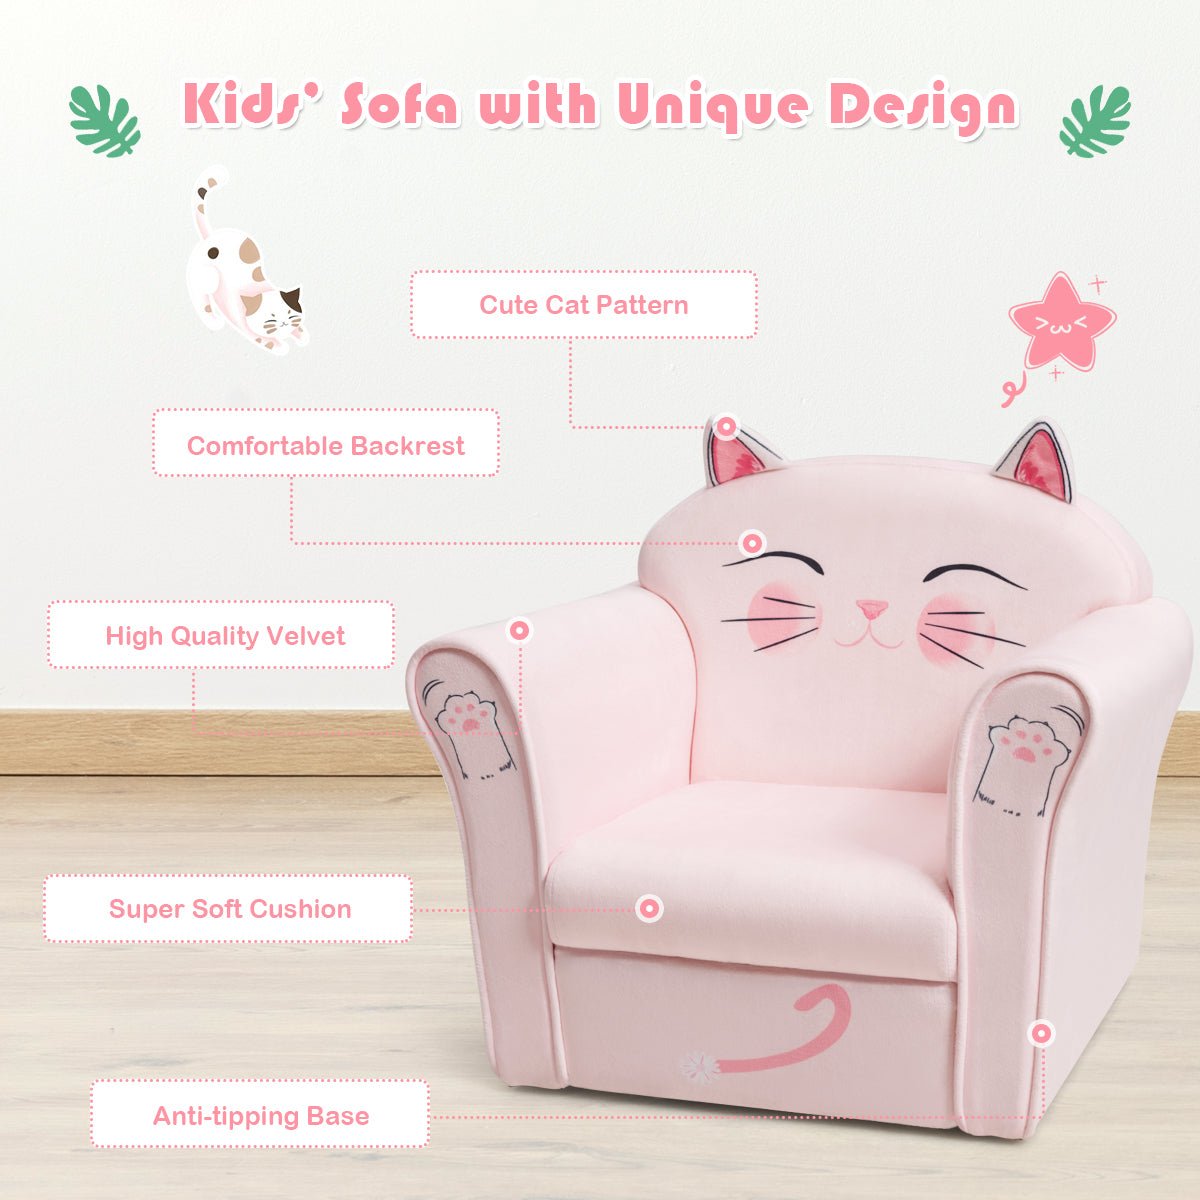 Children's Cat Pattern Chair: Wooden Frame Comfort in Baby's Room